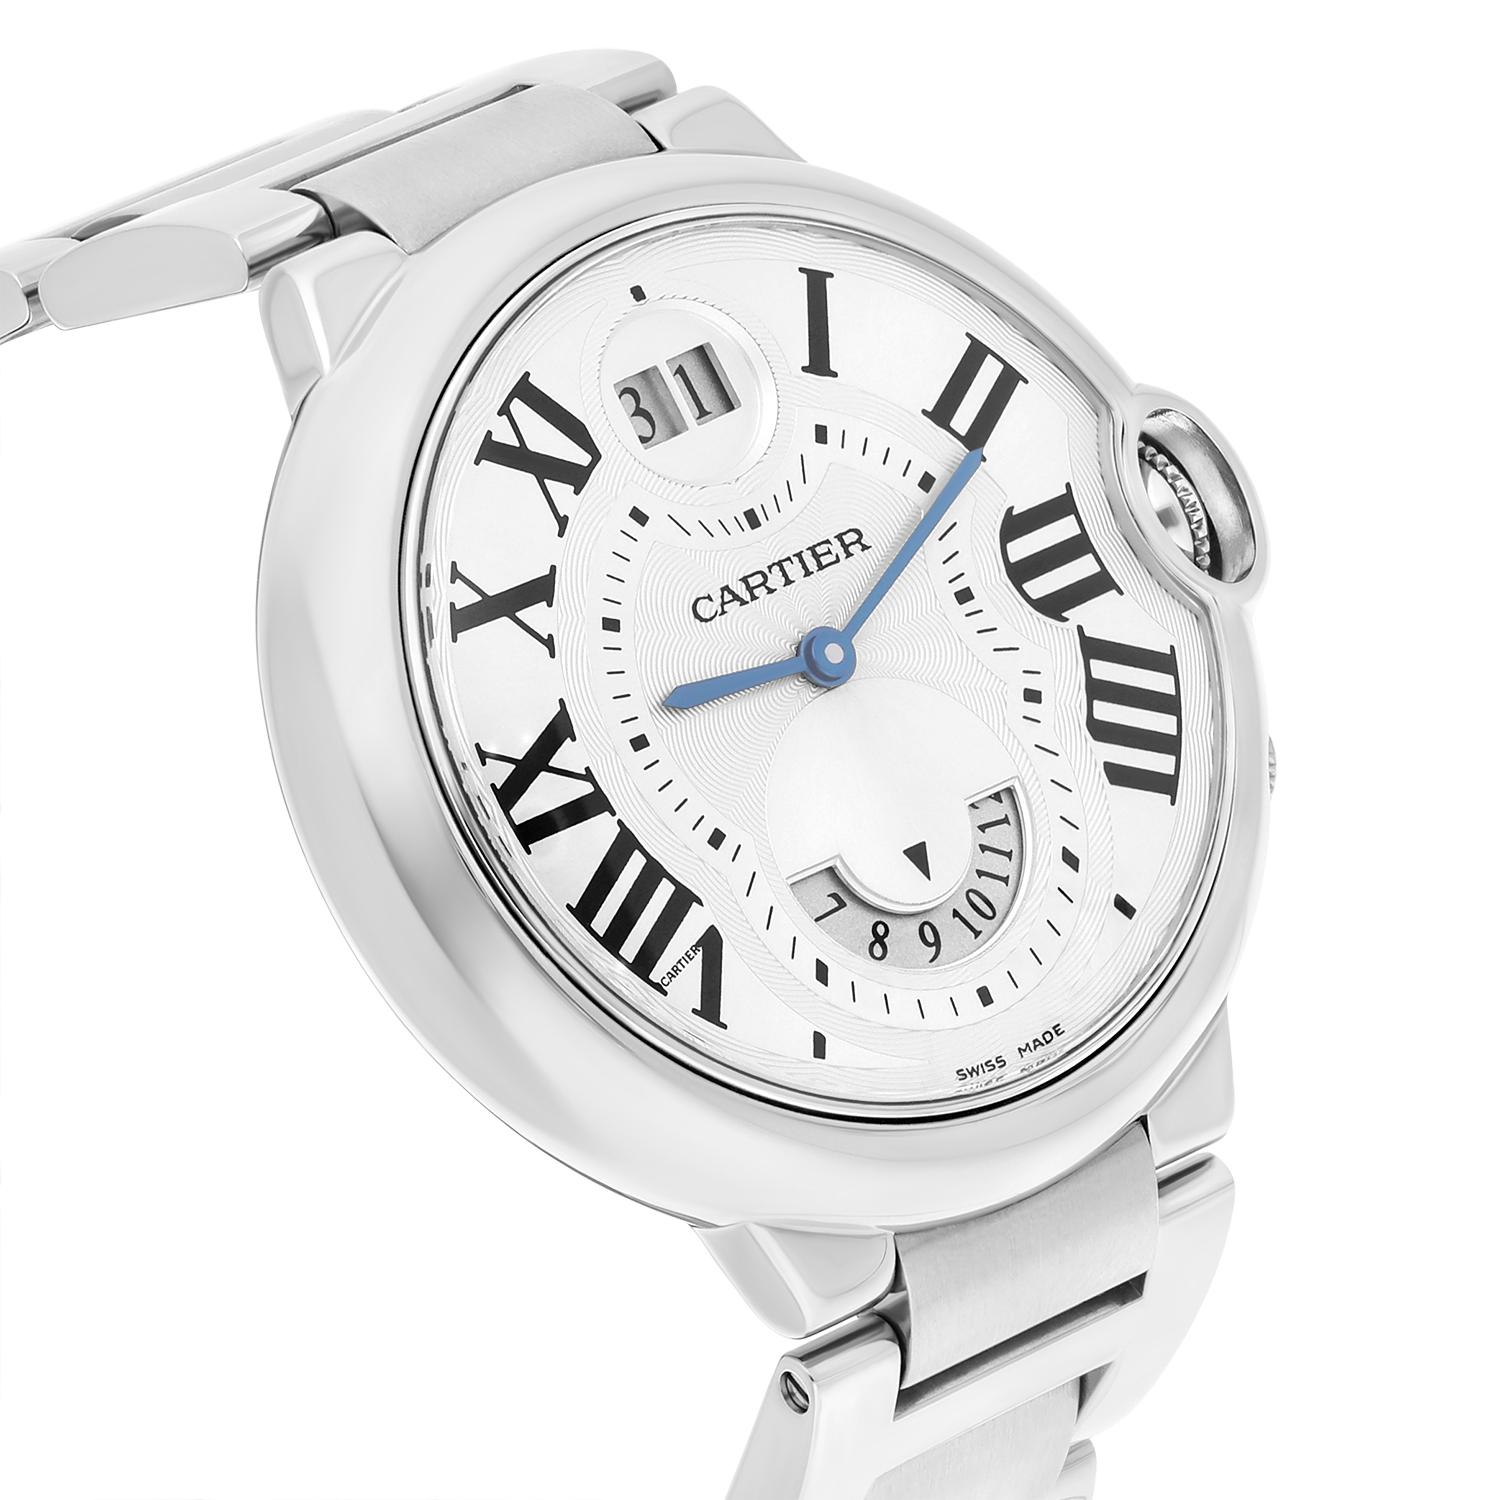 Cartier Ballon Bleu Stainless Steel Two Timezone Quartz Watch 38MM W6920011 For Sale 1